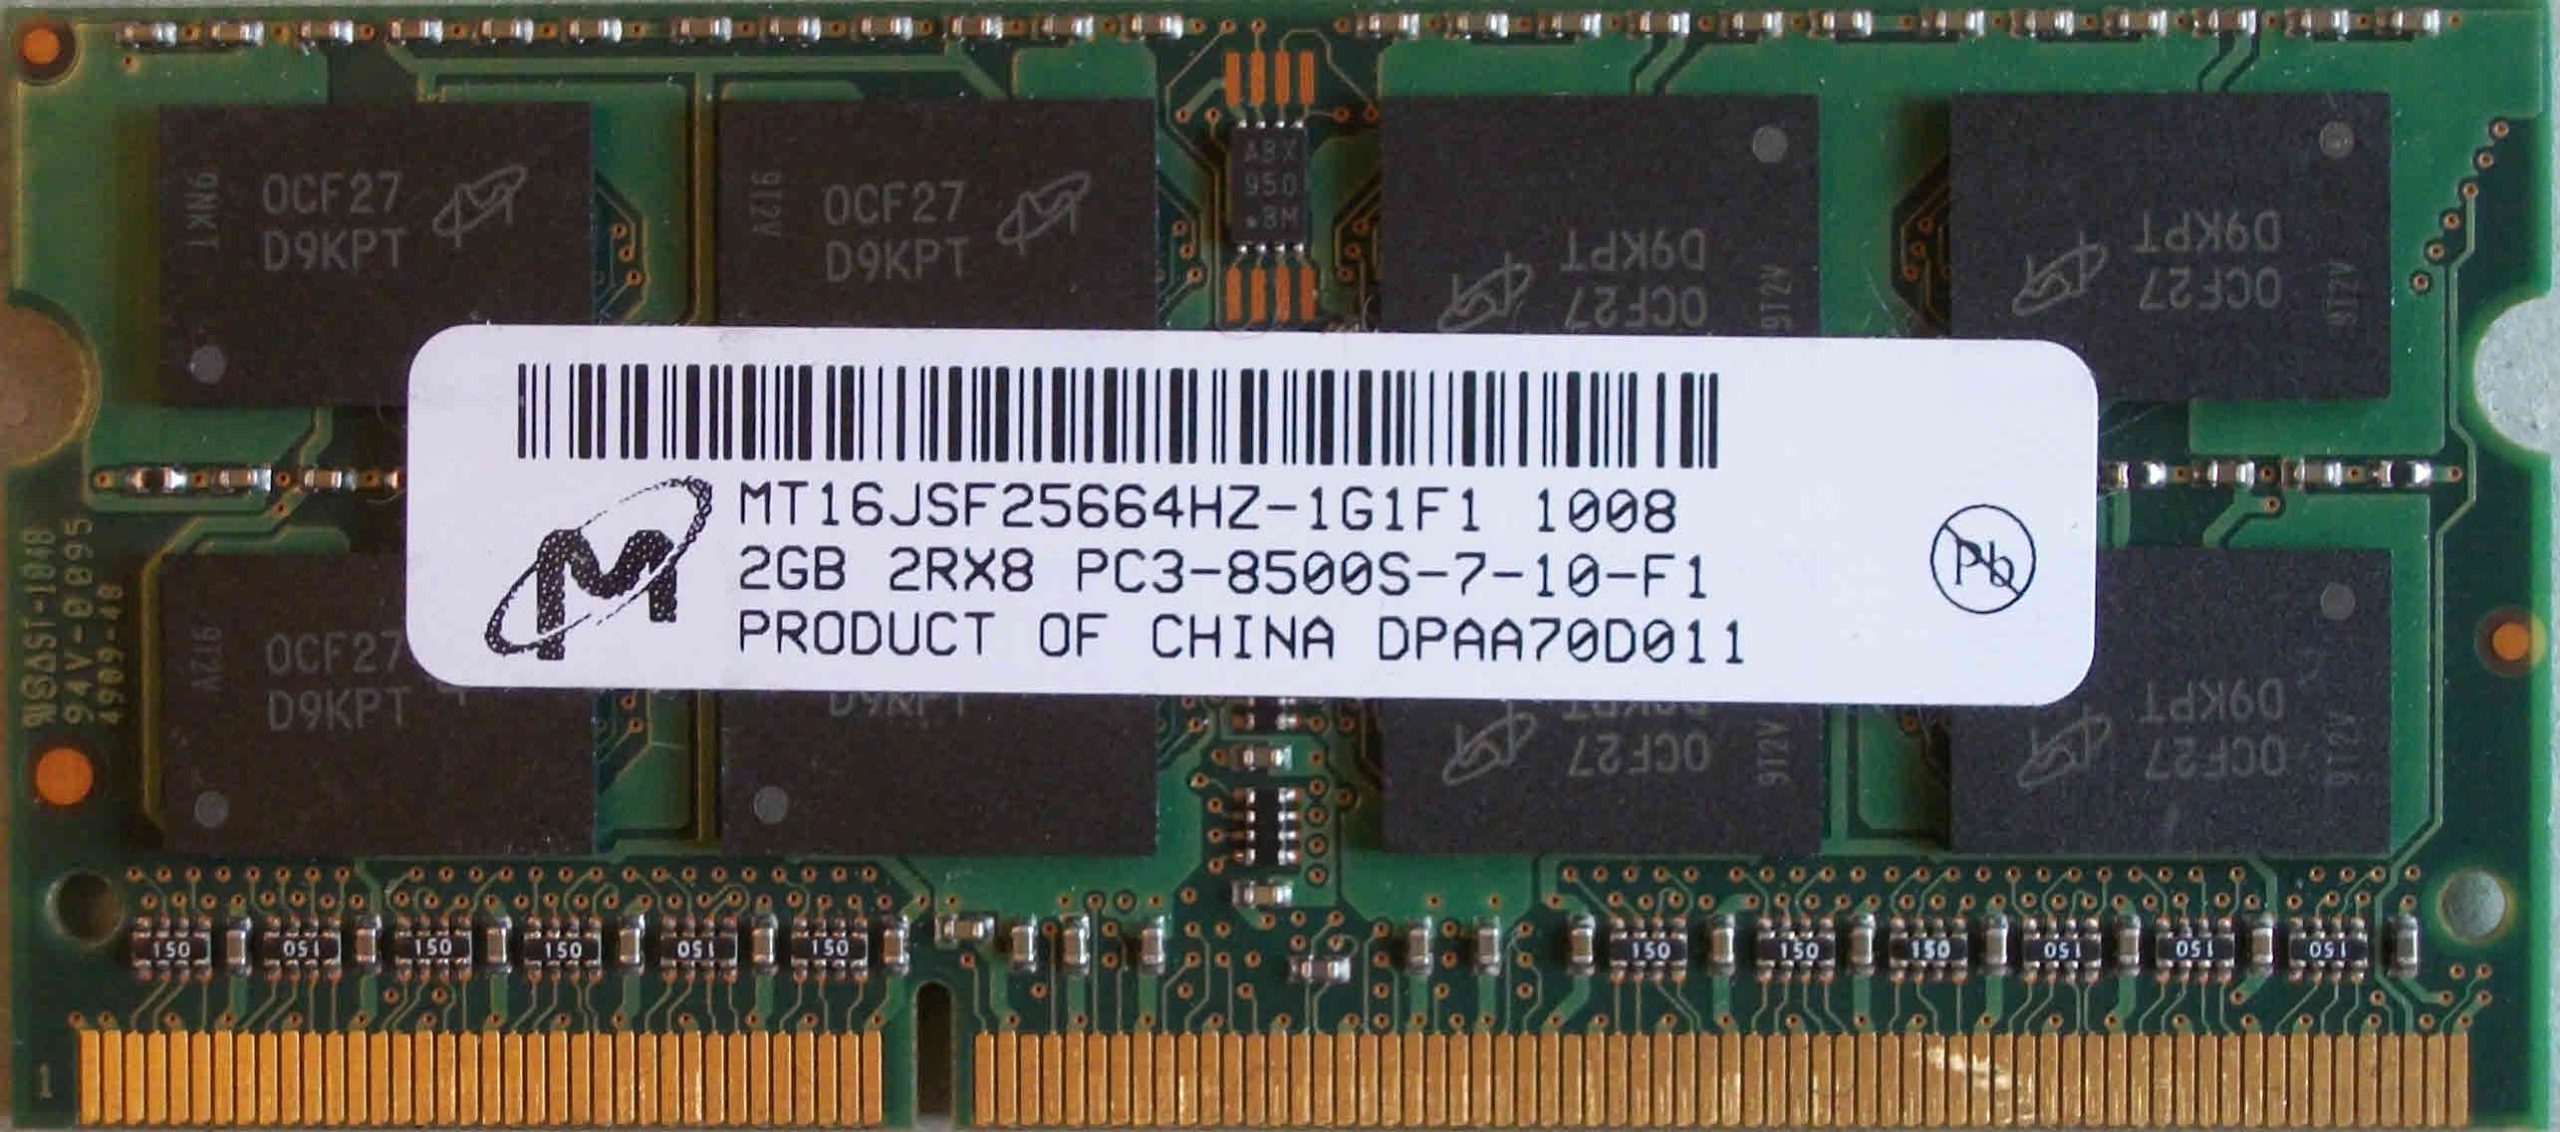 2GB 2Rx8 PC3-8500S-07-10-F1 Micron